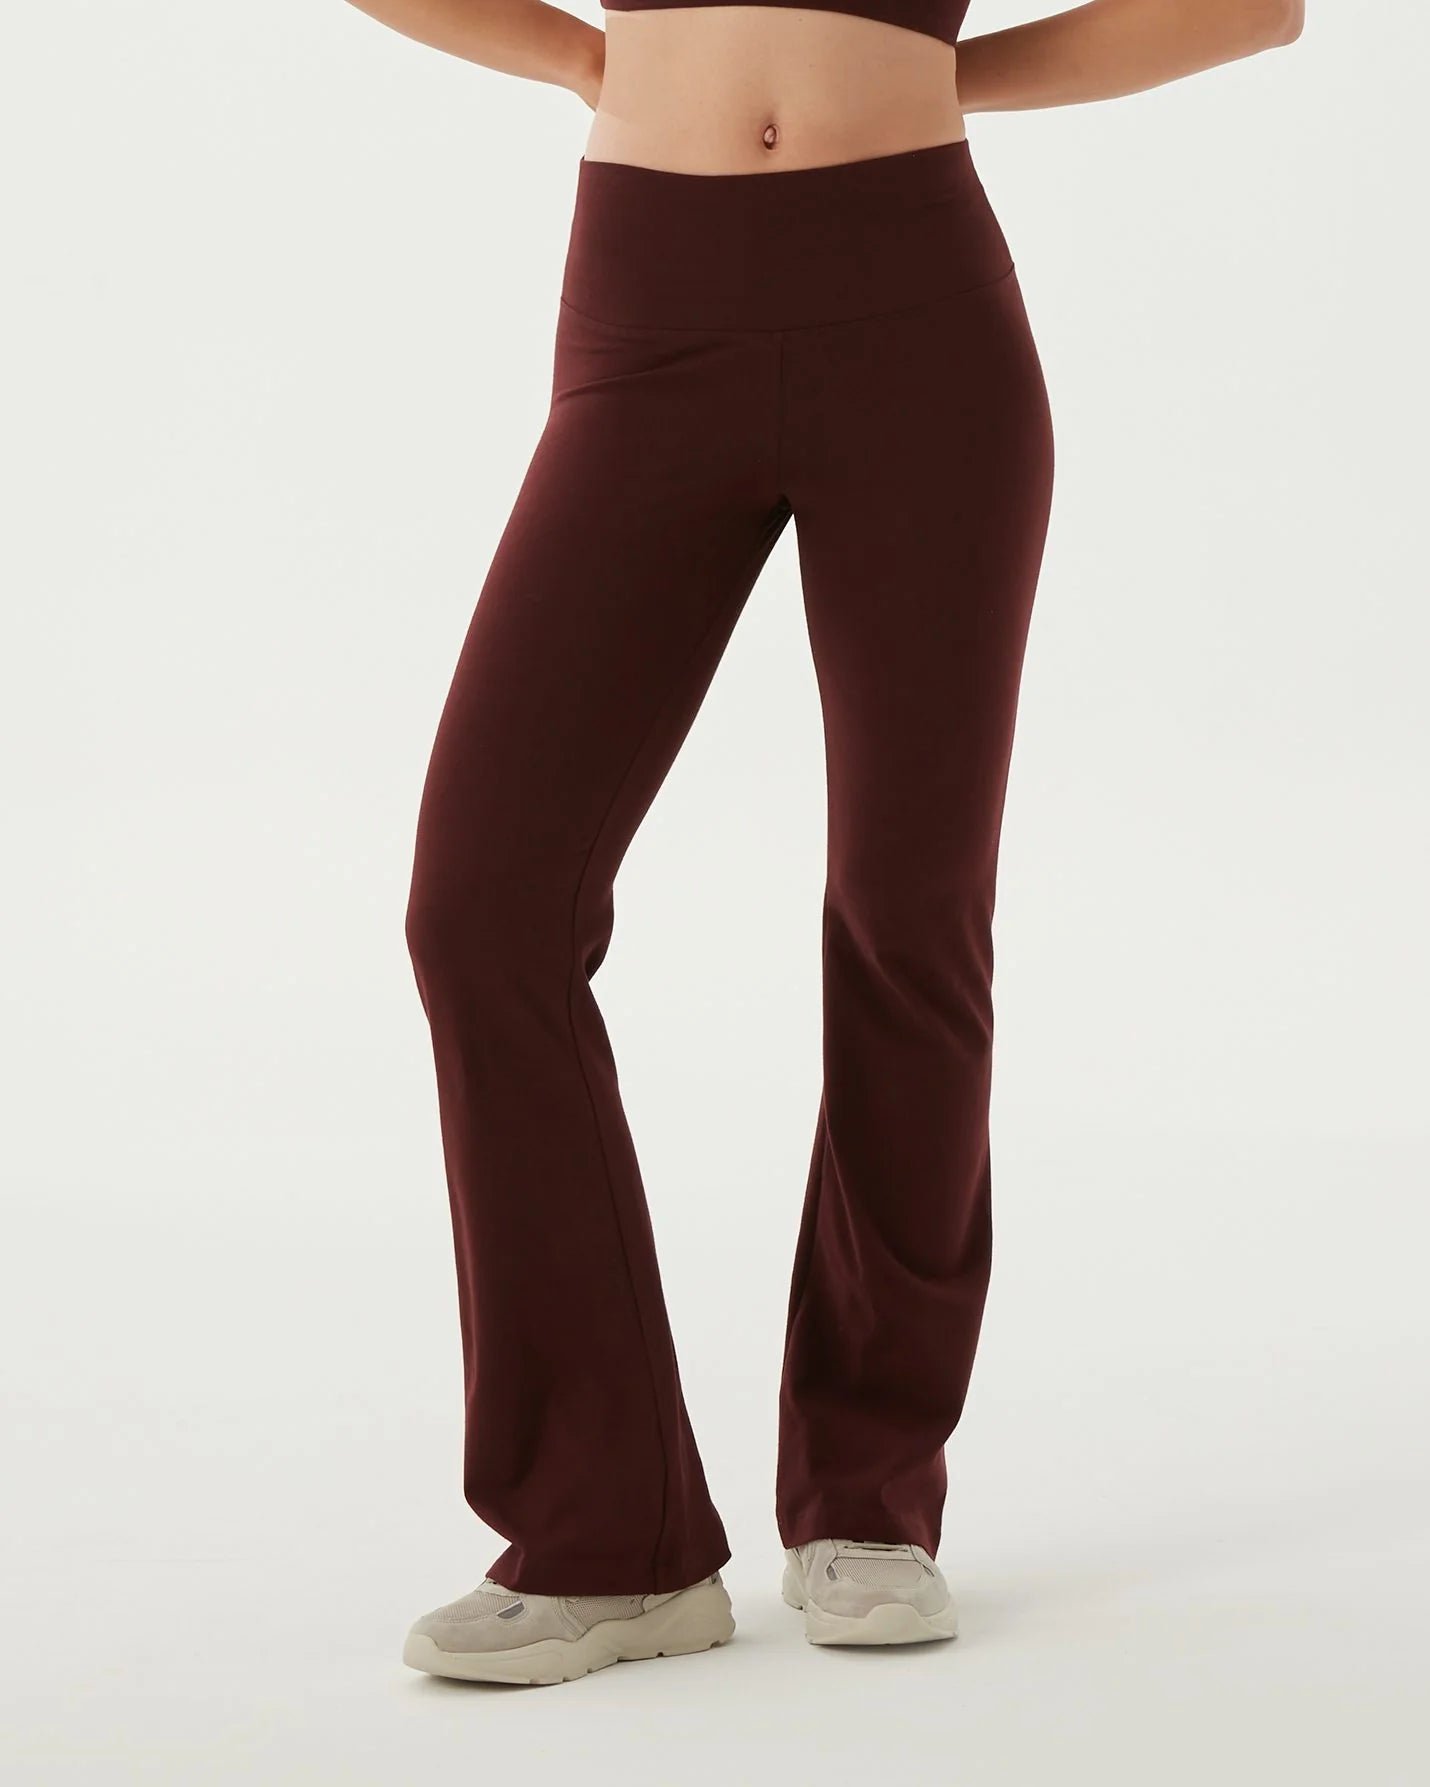 Yoga Pants ⫷⫸ Wide Bottom Leggings with Slits ⫷⫸ Organic Cotton